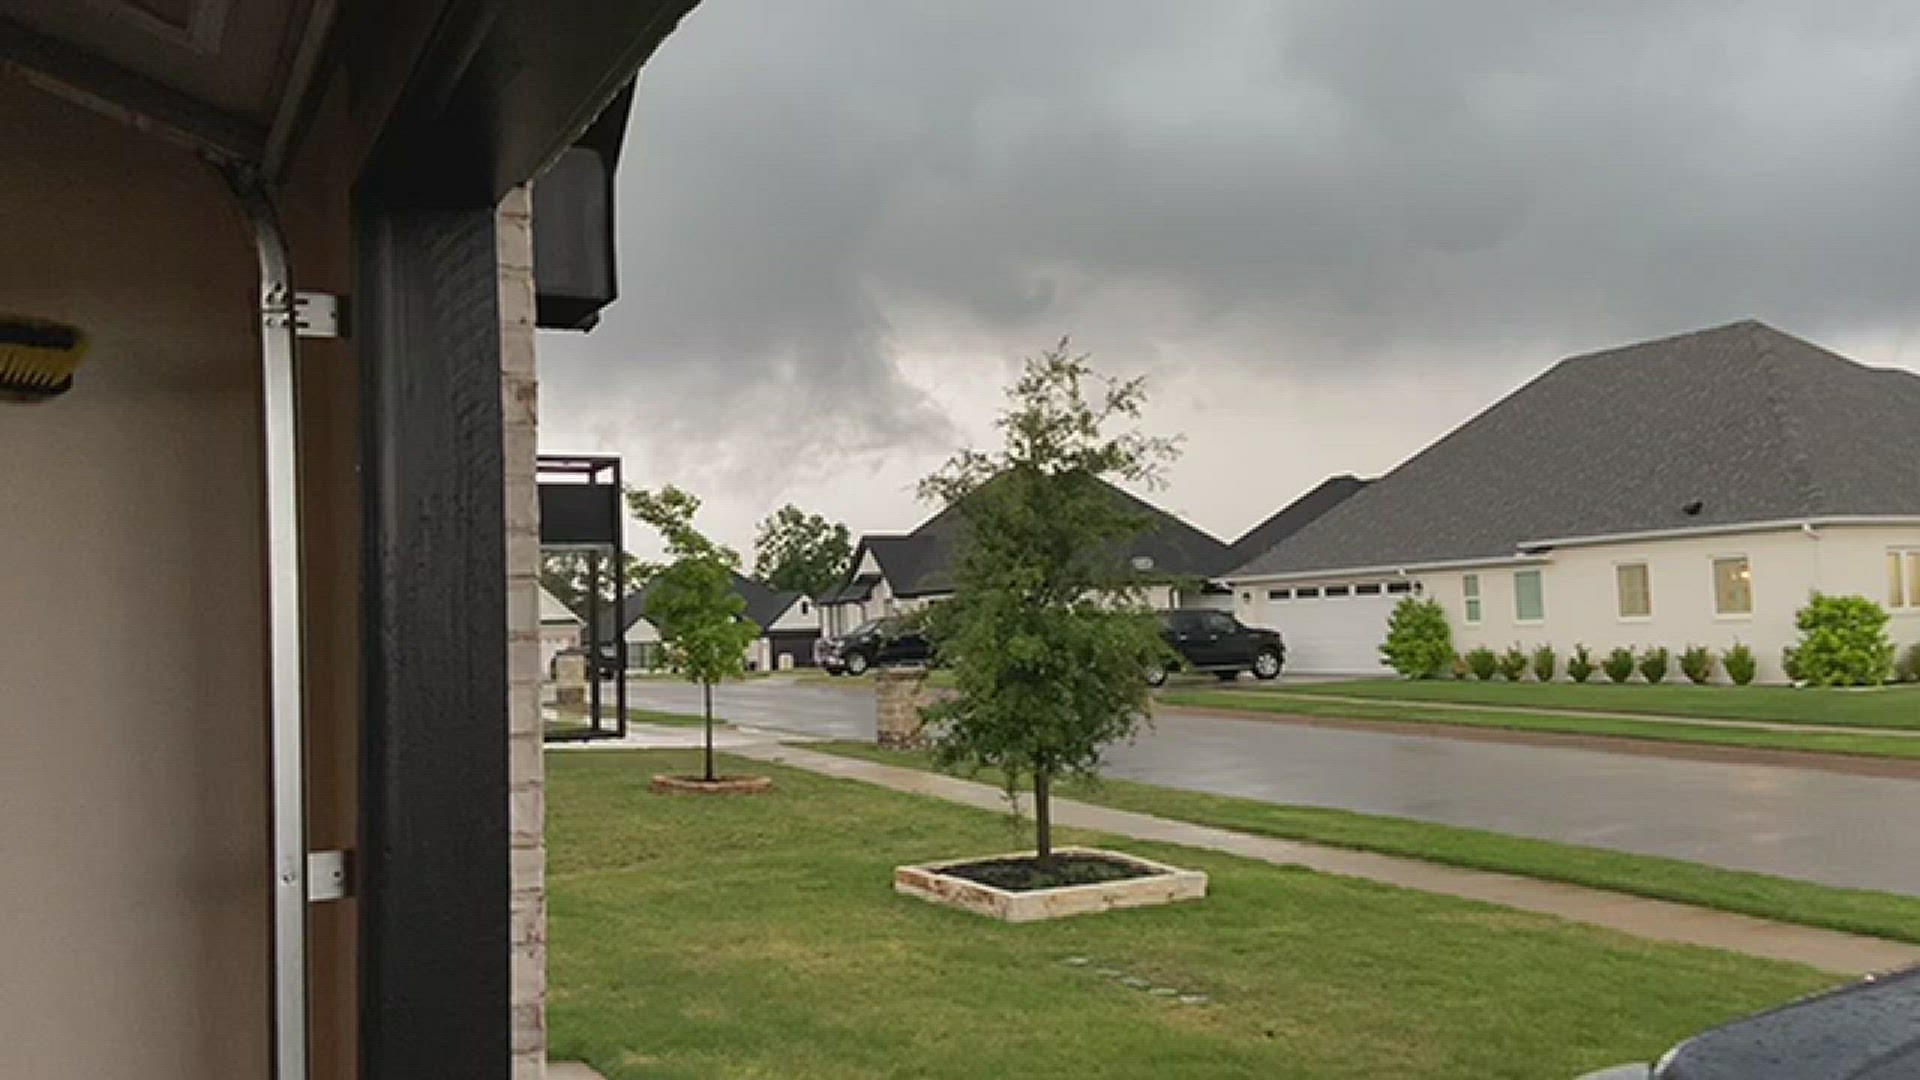 Tornado seen on camera passing through Tyler cbs19.tv